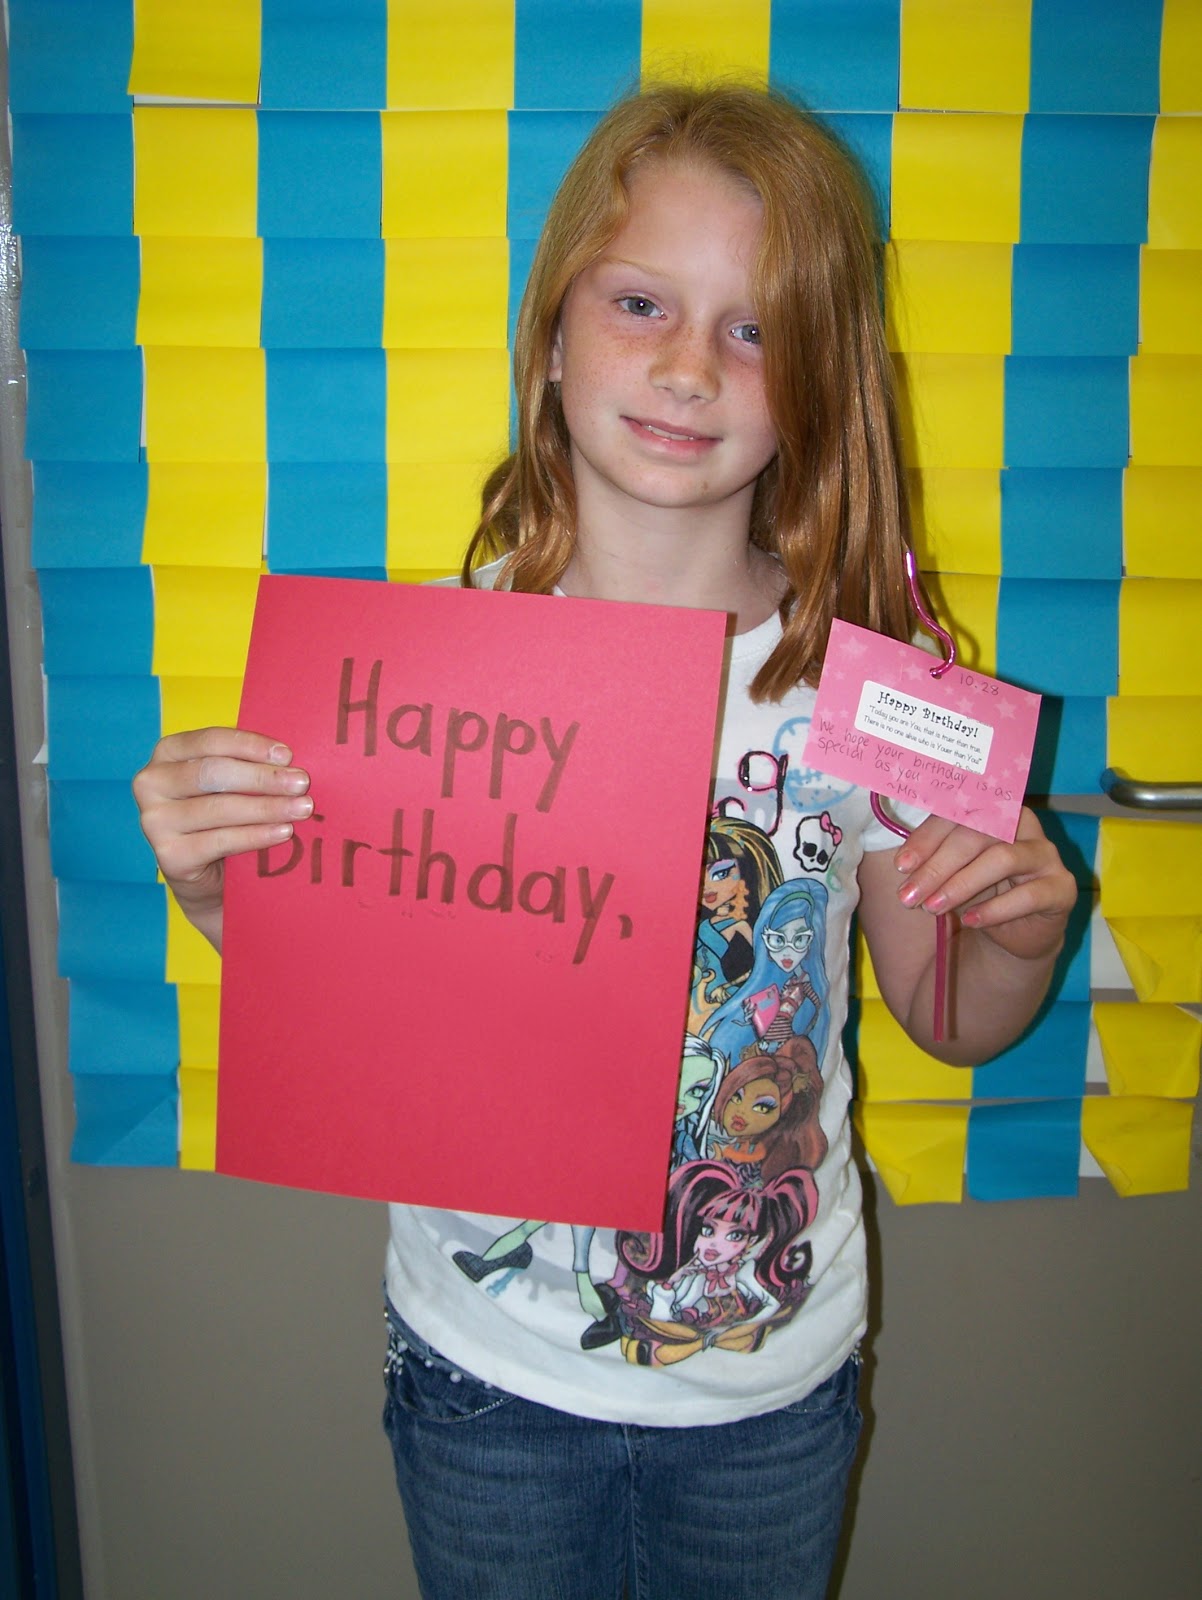 Team Kirkham-Remley Fourth Grade: Happy Birthday!